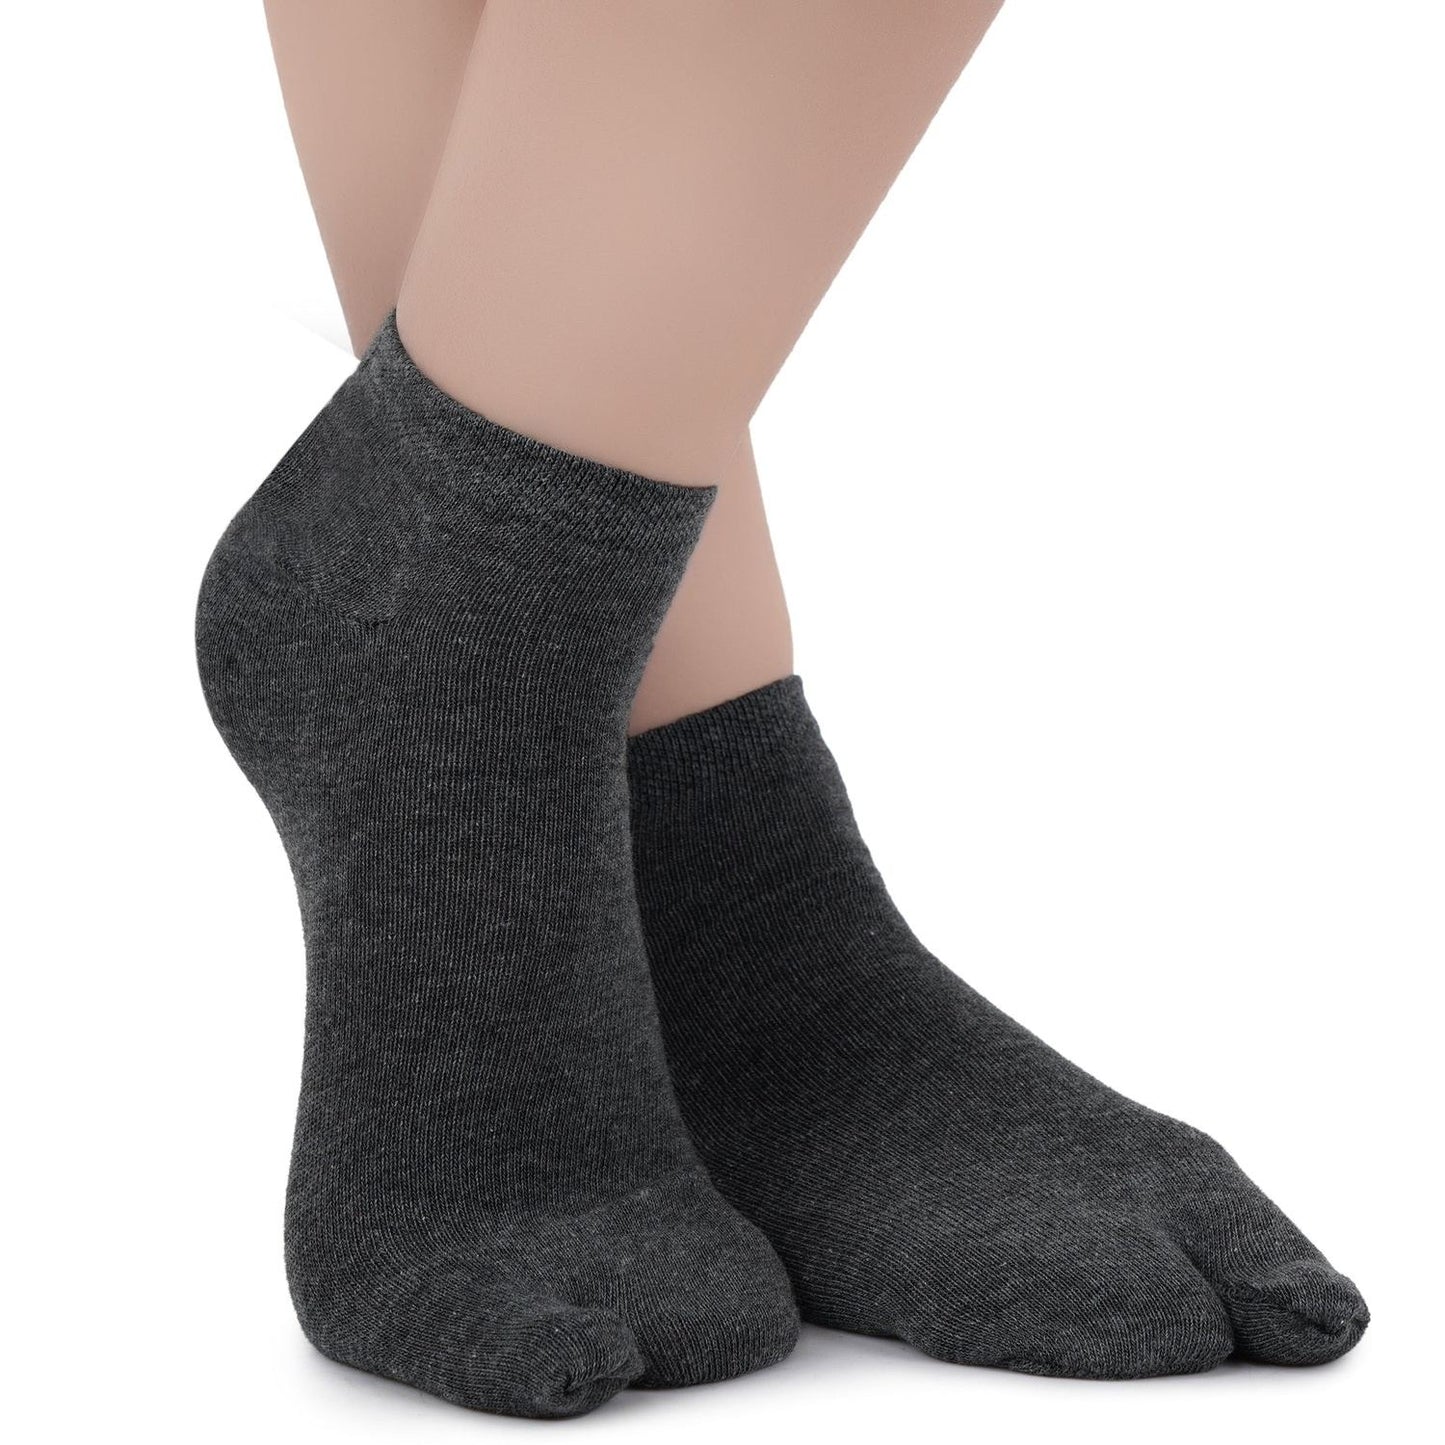 Low Ankle Length Thumb Socks - Dark Grey